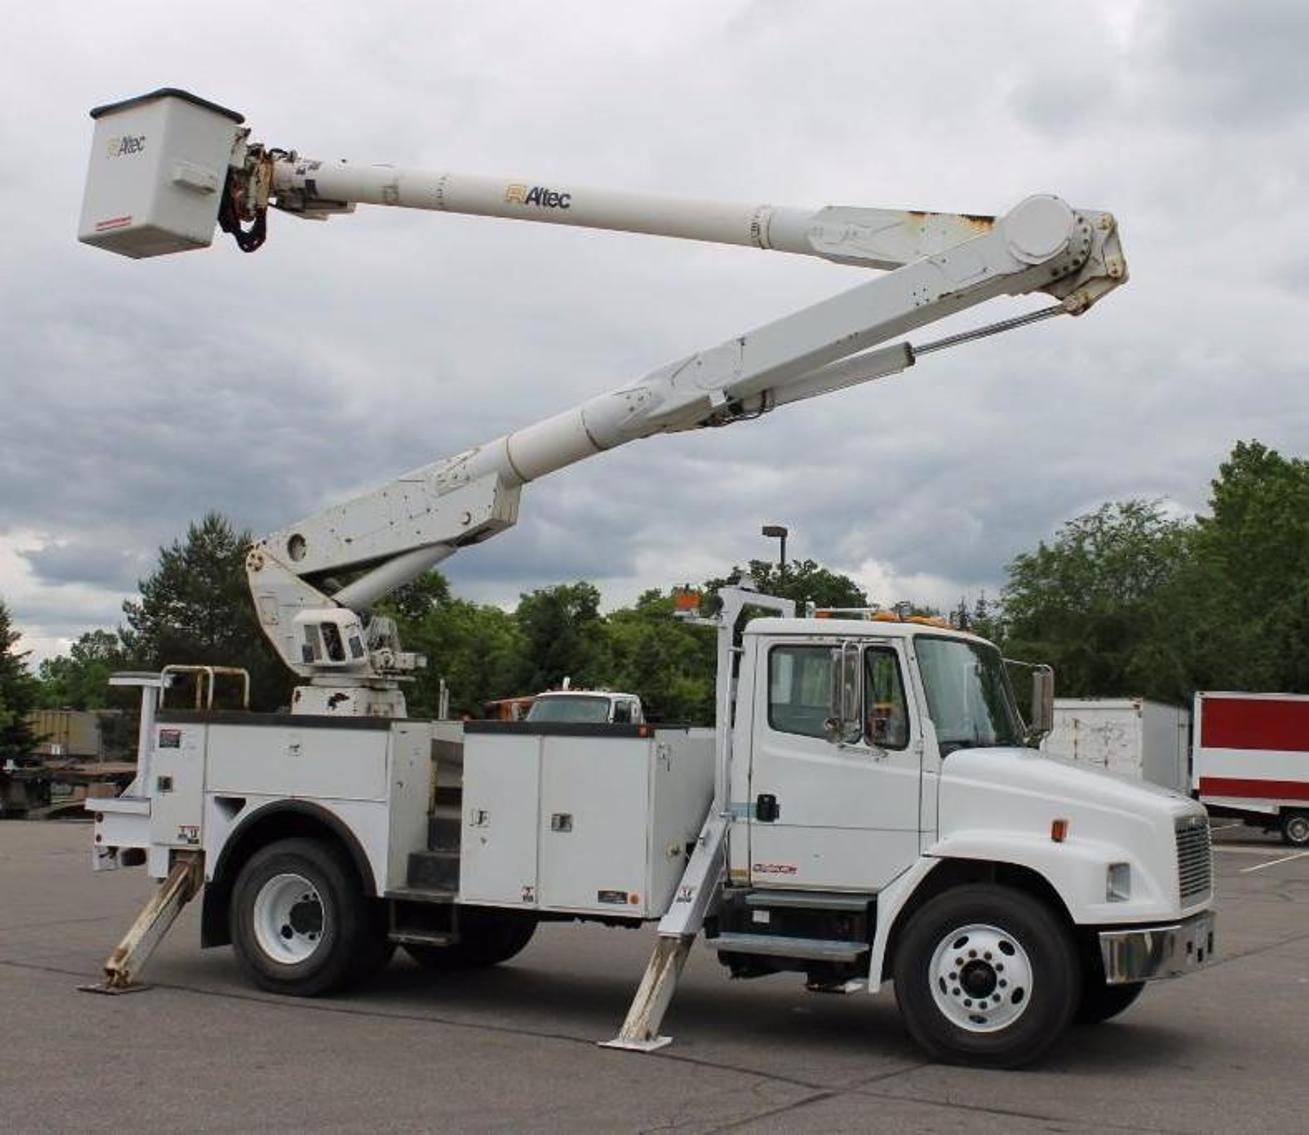 Boyer Truck & Equipment June Auction